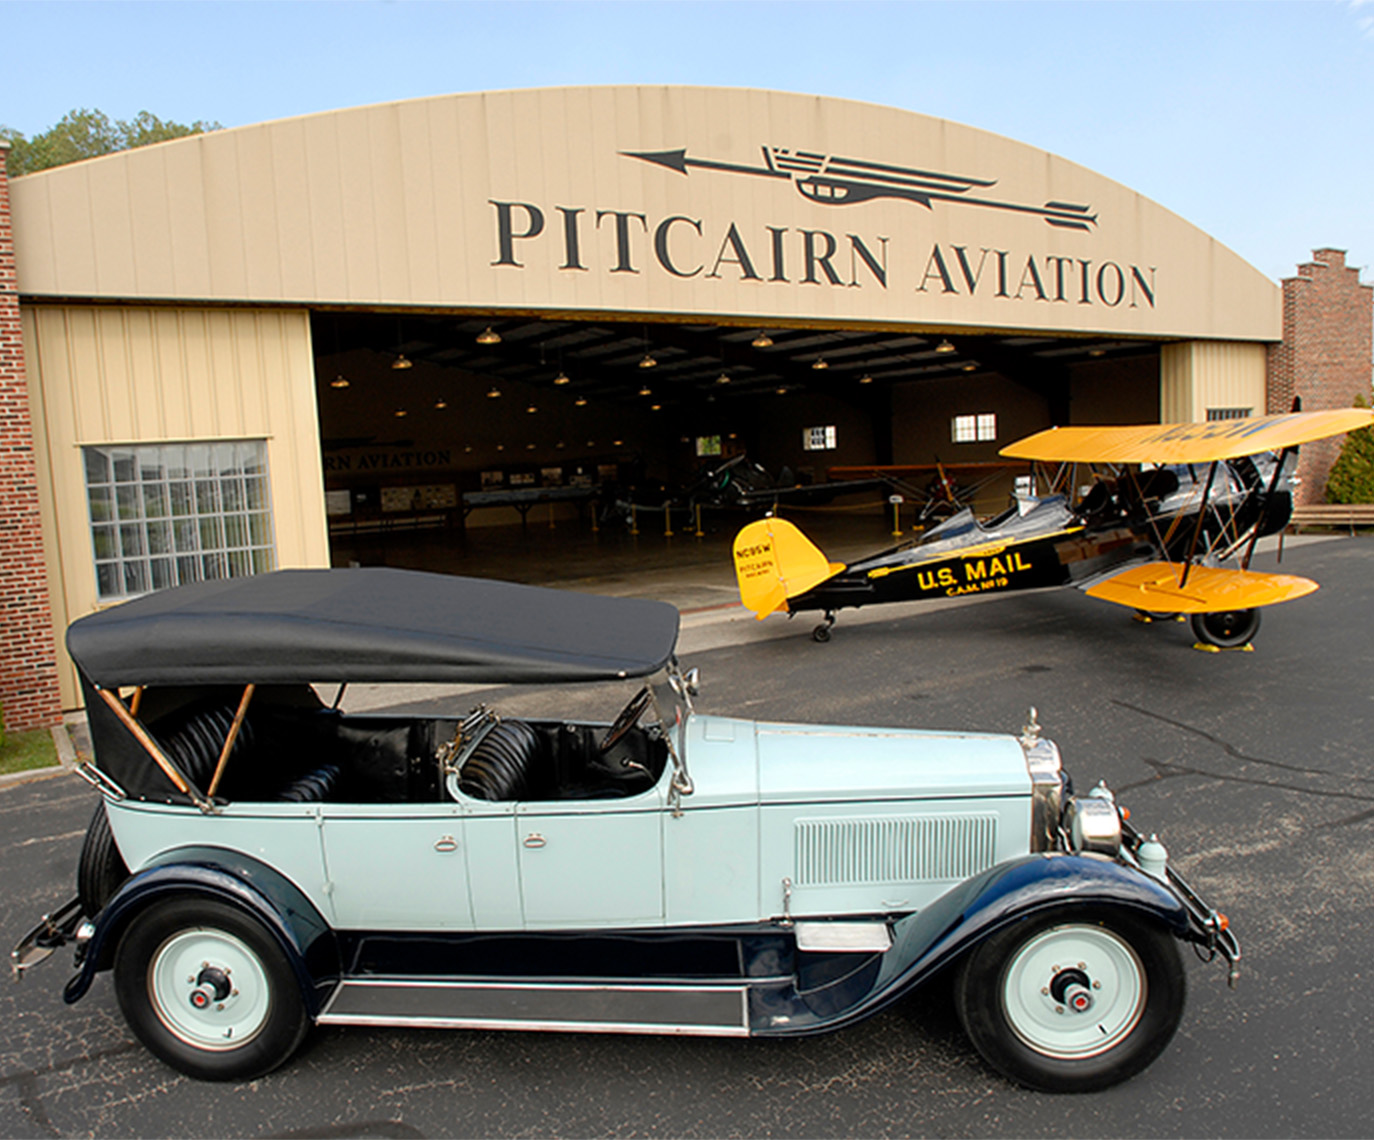 Pitcairn Aviation